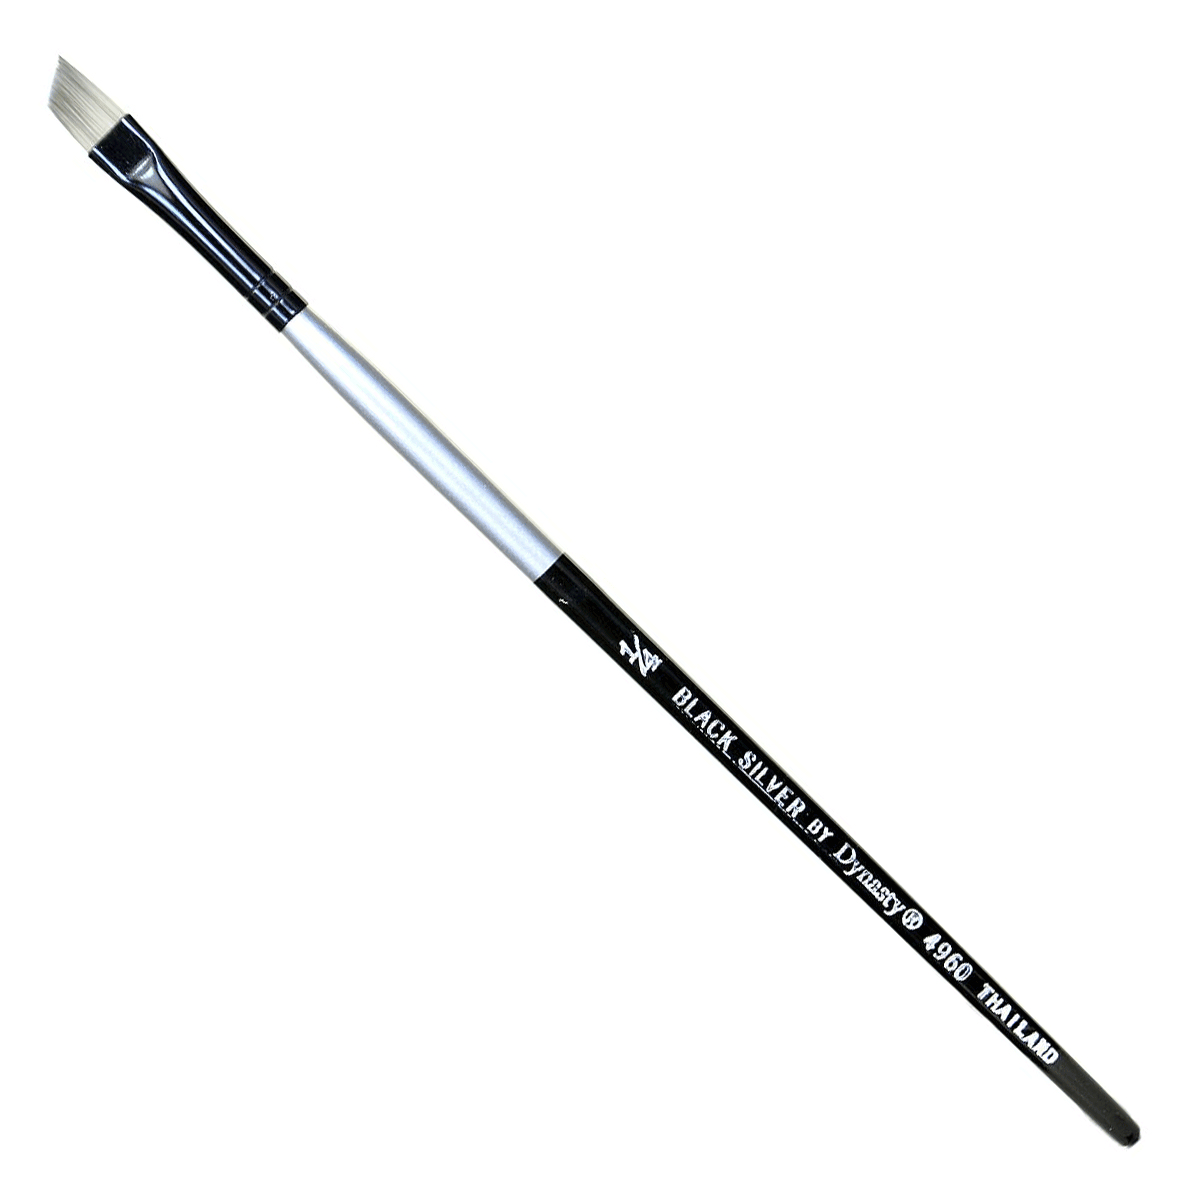 Dynasty Black Silver SH Brush - Angle 1/4 inch